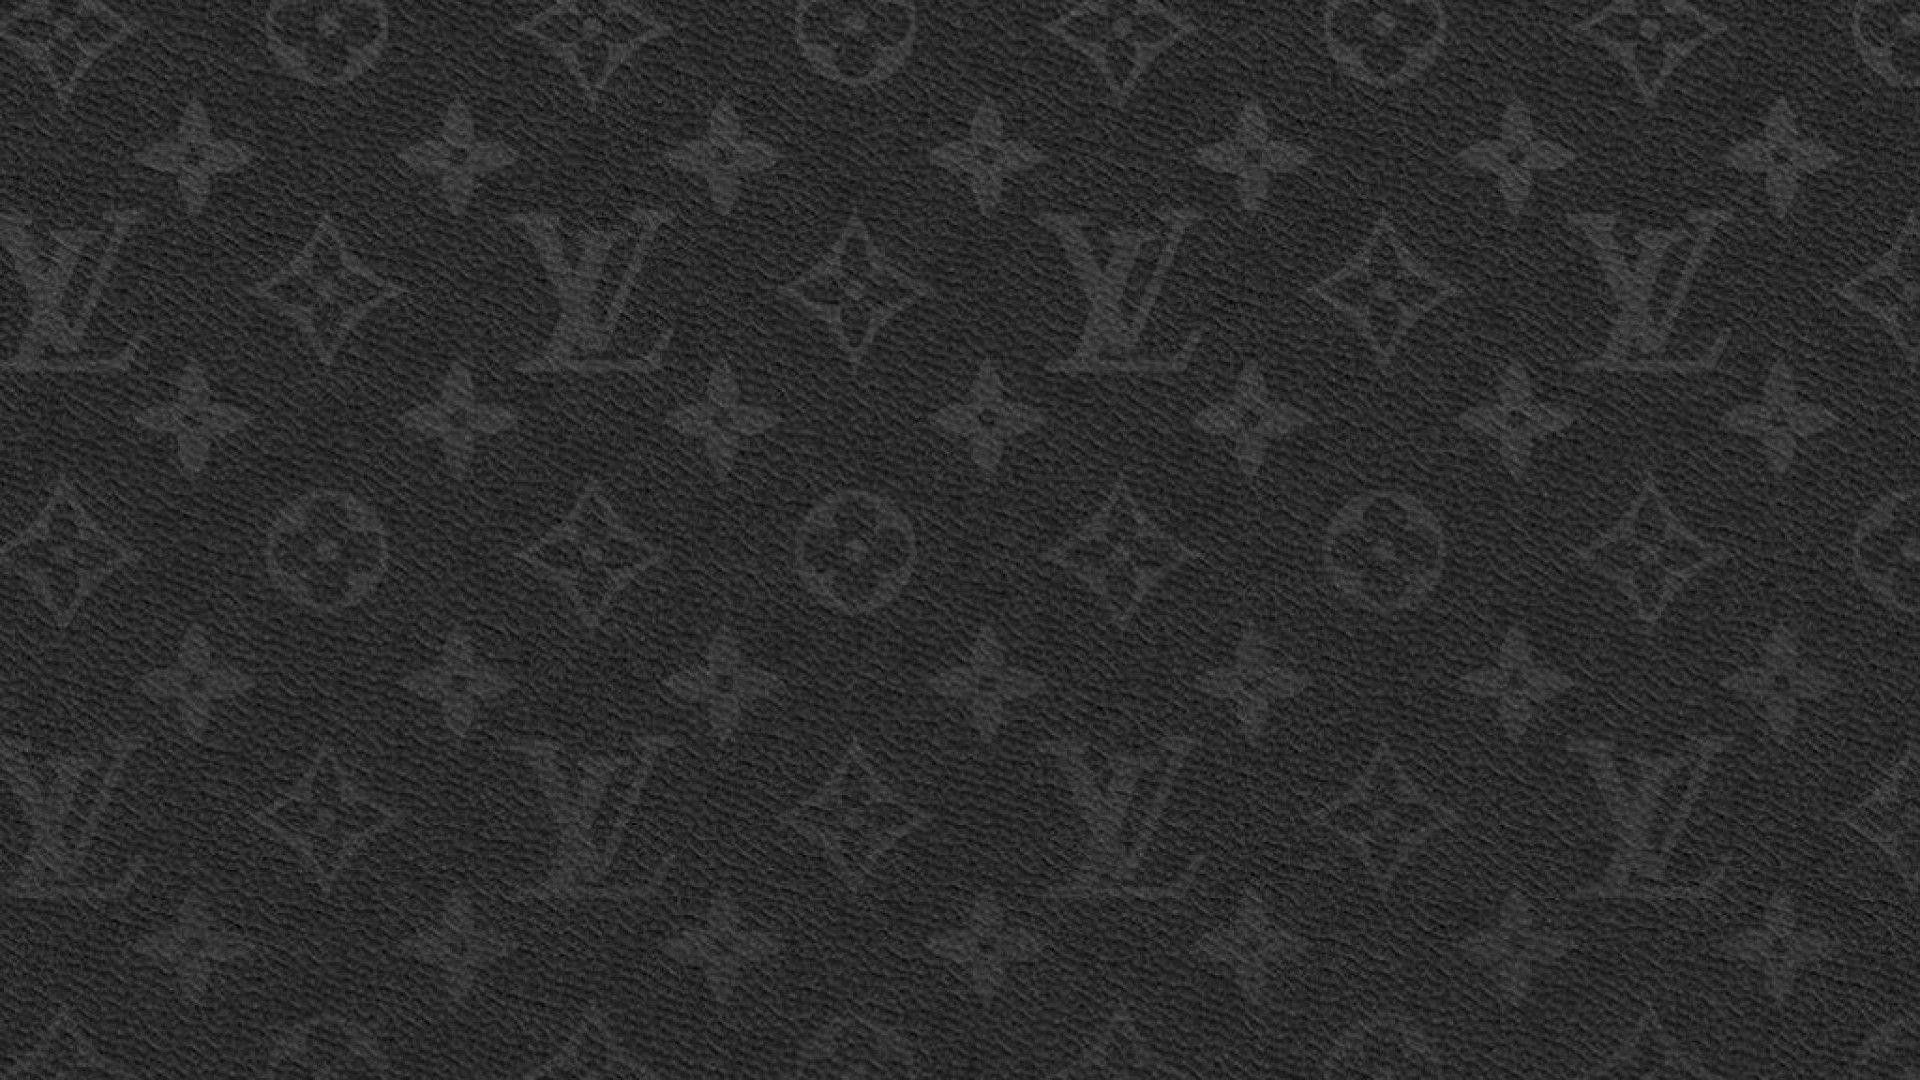 Louis Vuitton Hd Wallpapers For Laptop - Wallpaperforu